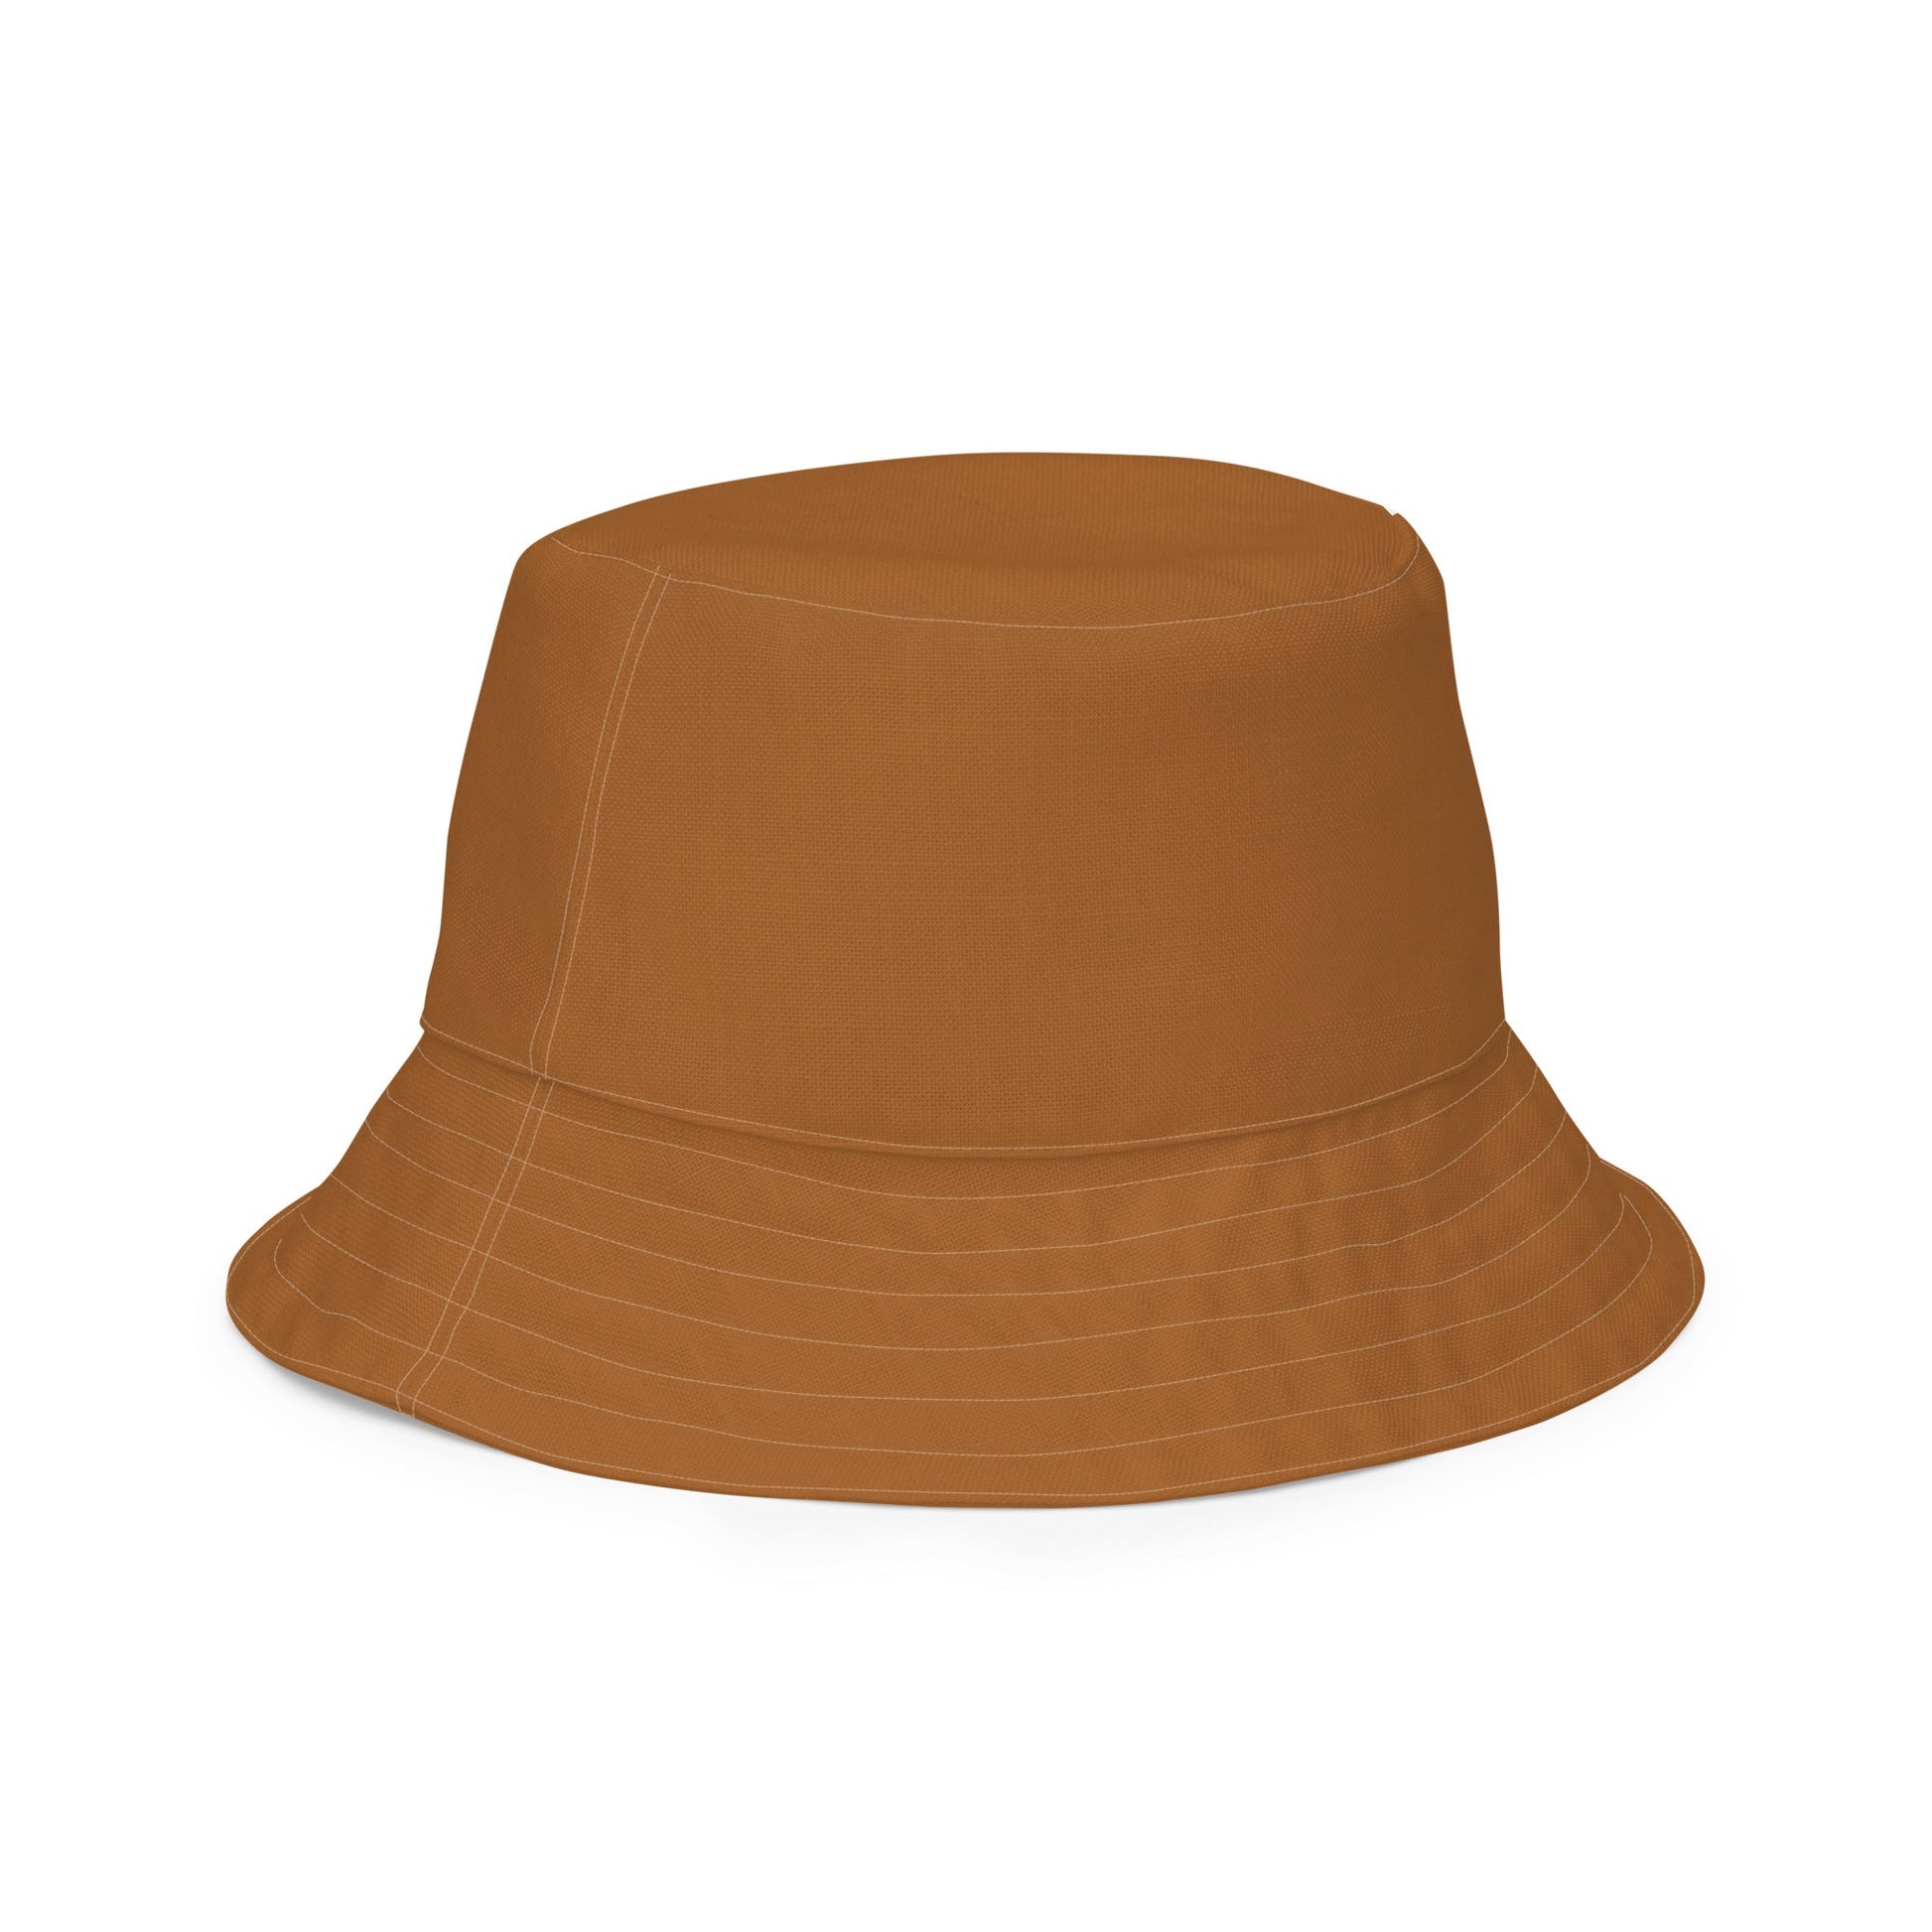 Fall Black and Tan Plaid Reversible bucket hat - Appalachian Bittersweet - bucket hat